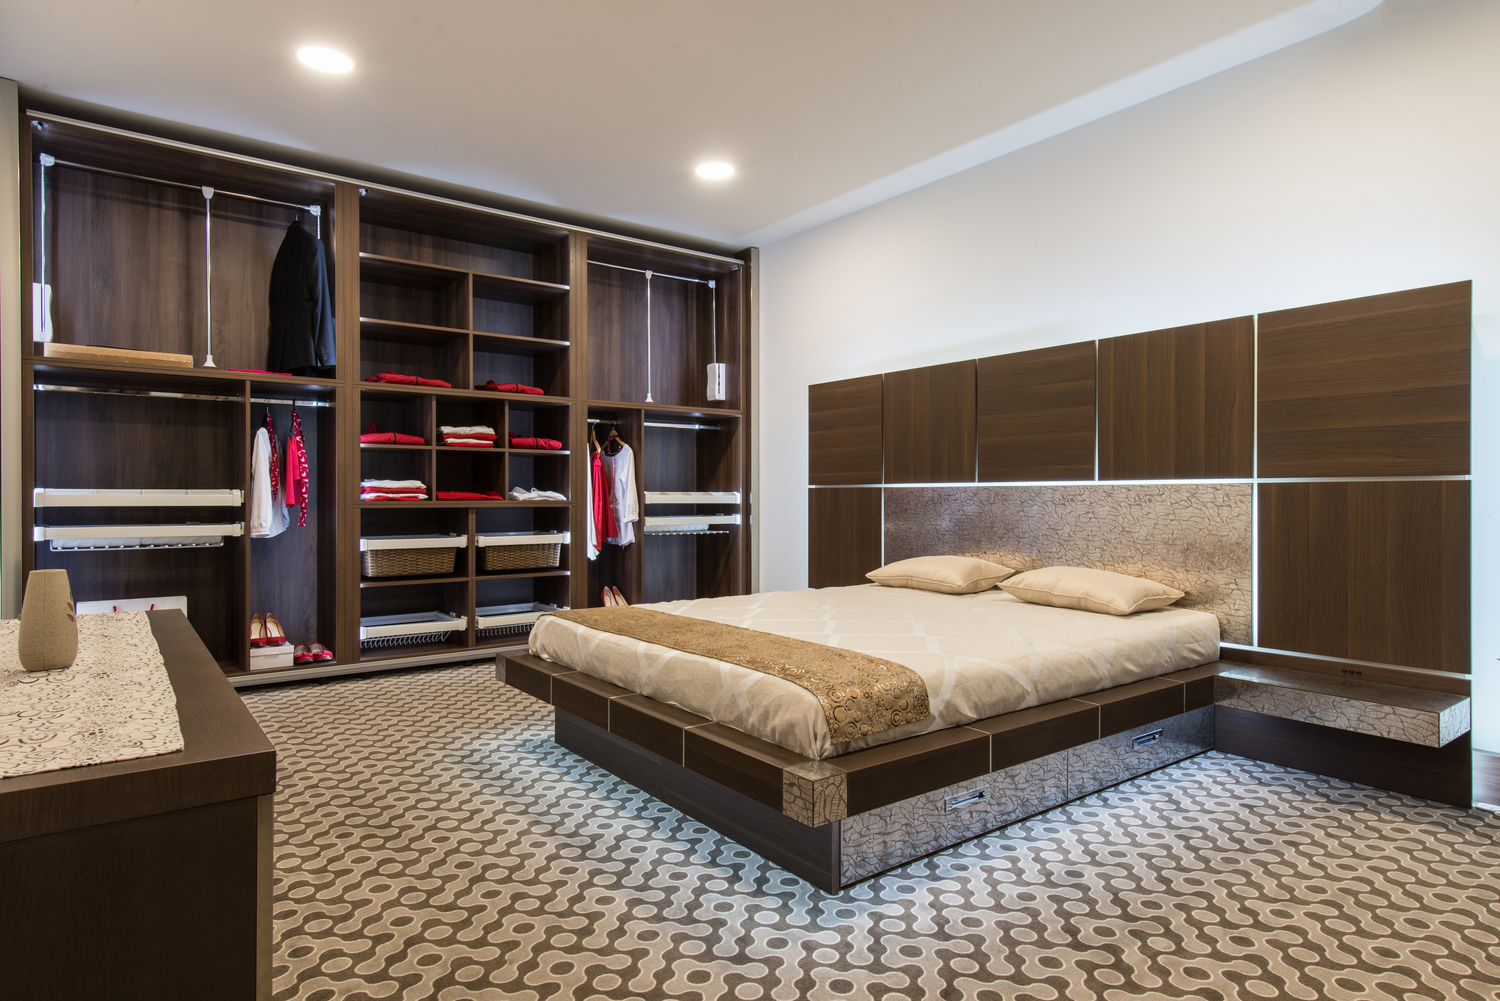 buy bedroom furniture singapore